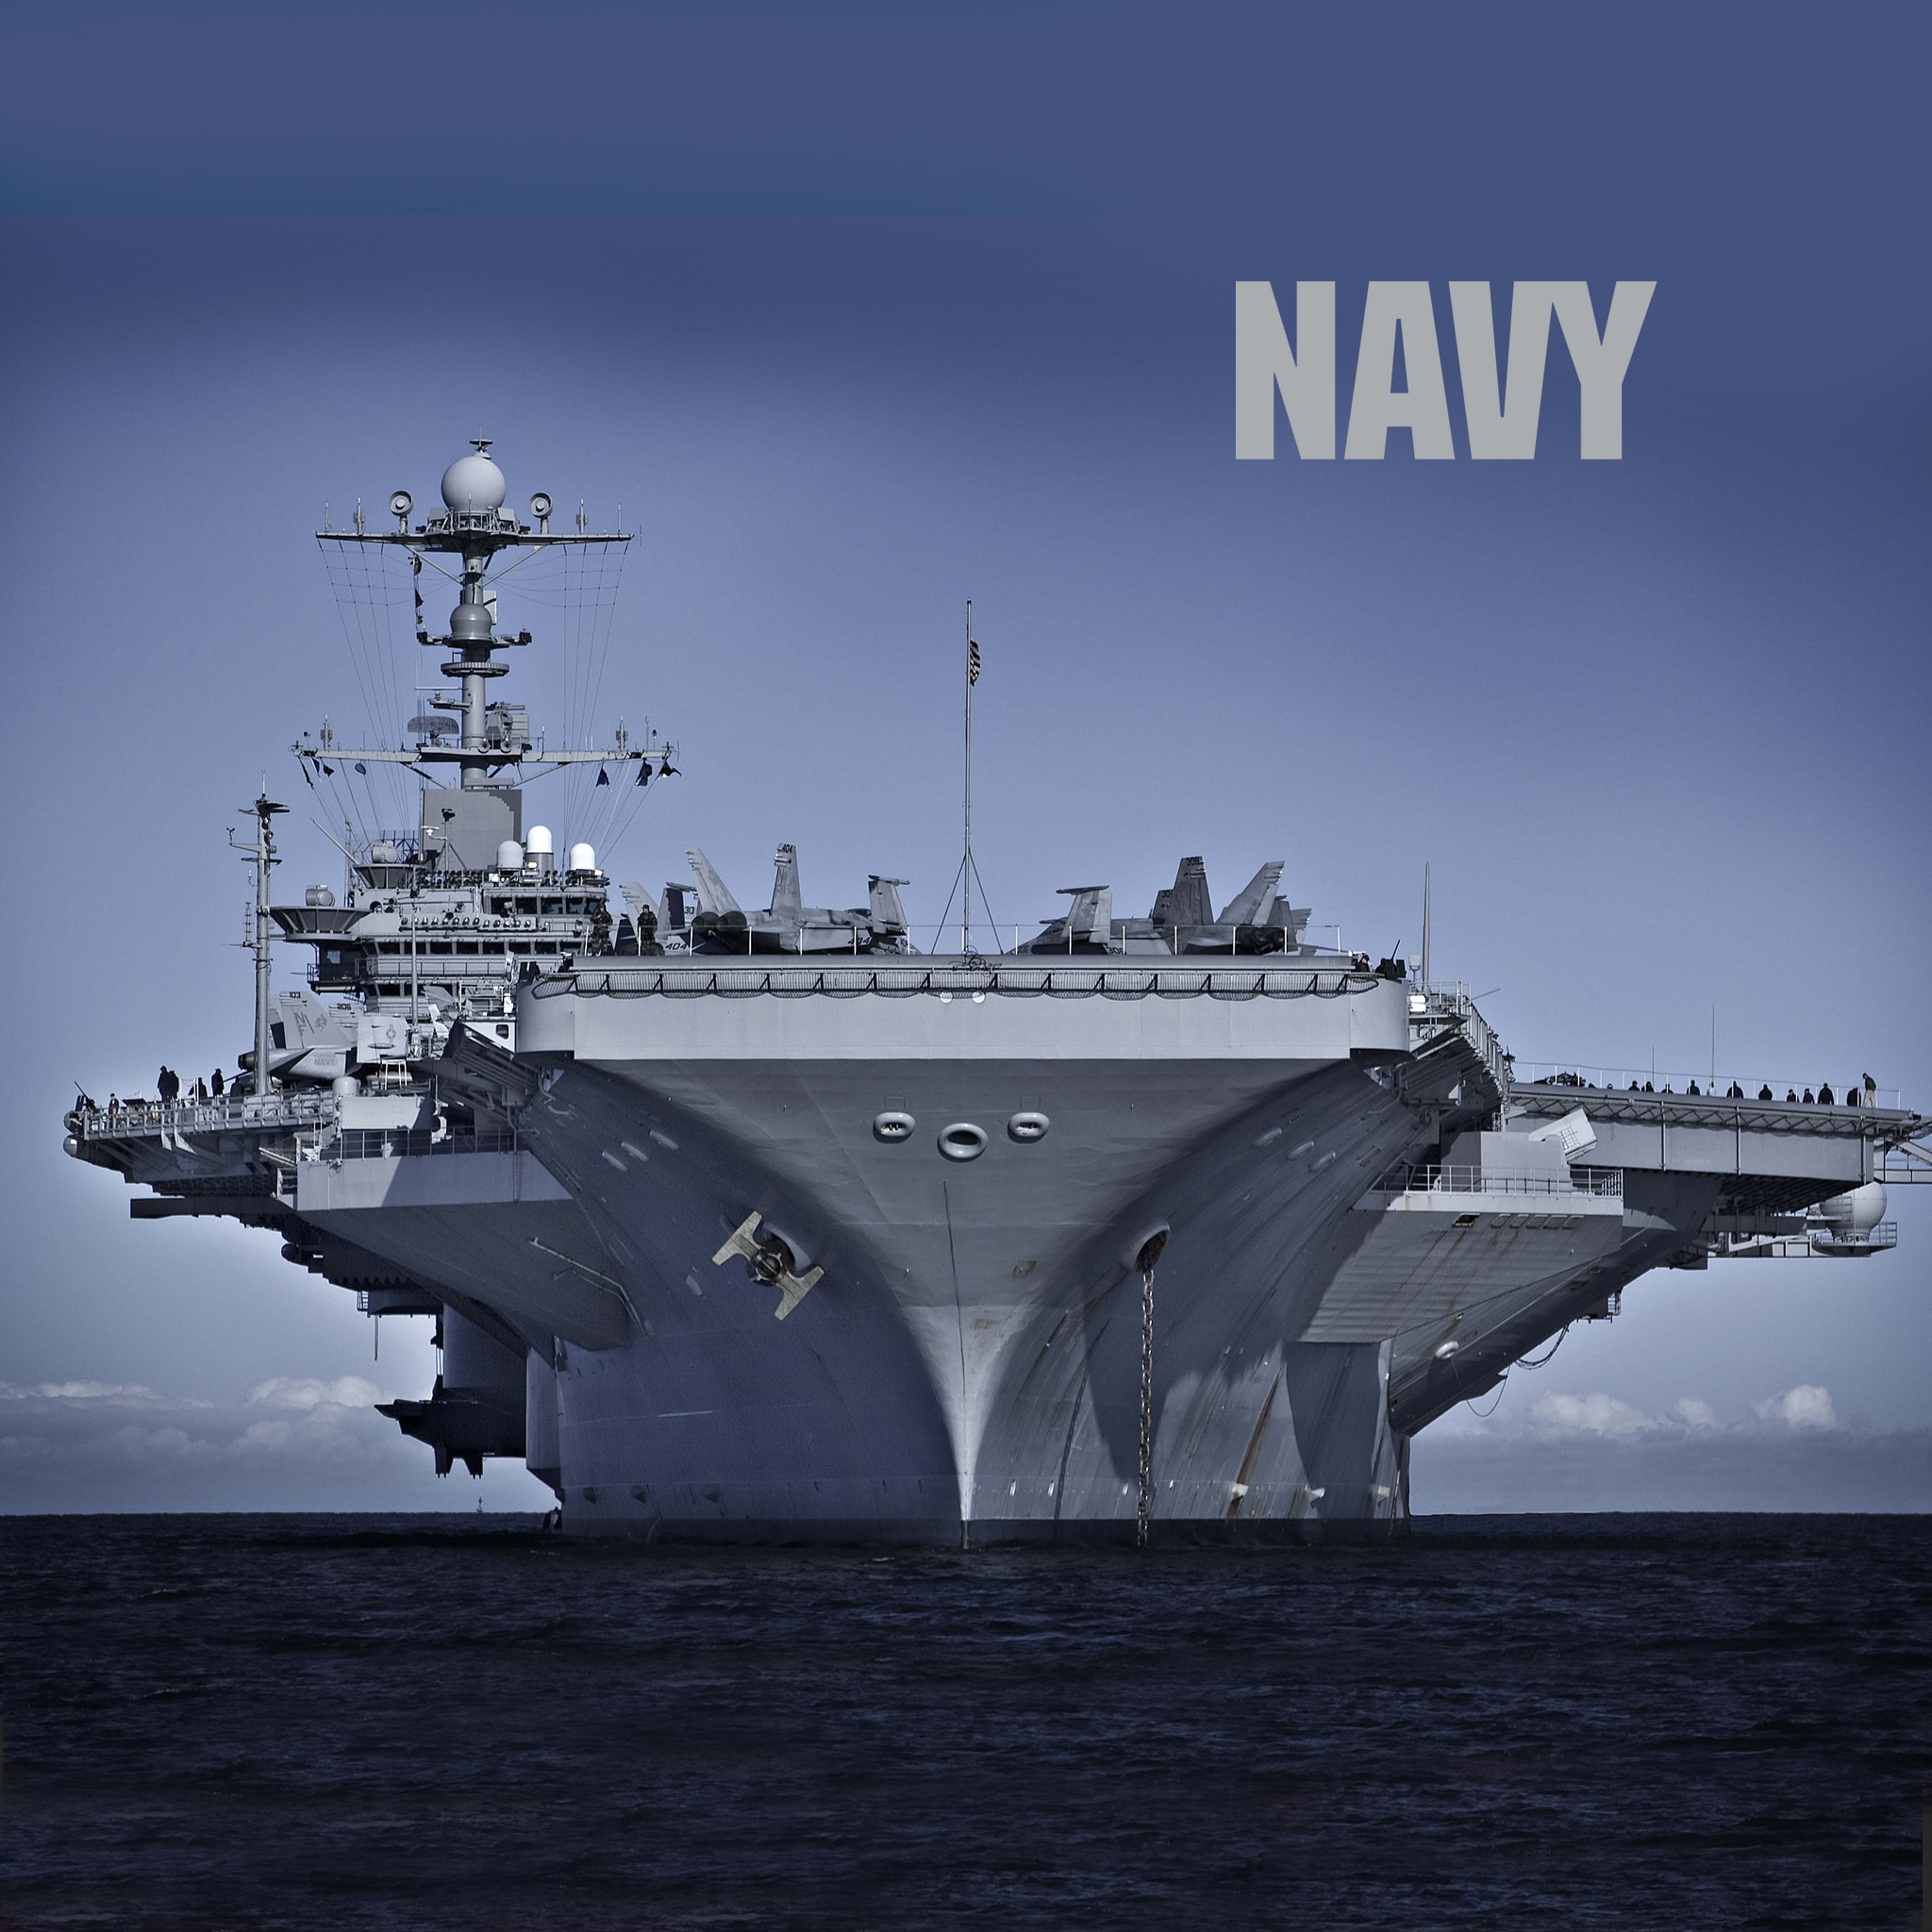 United States Navy iPhone Wallpaper - WallpaperSafari